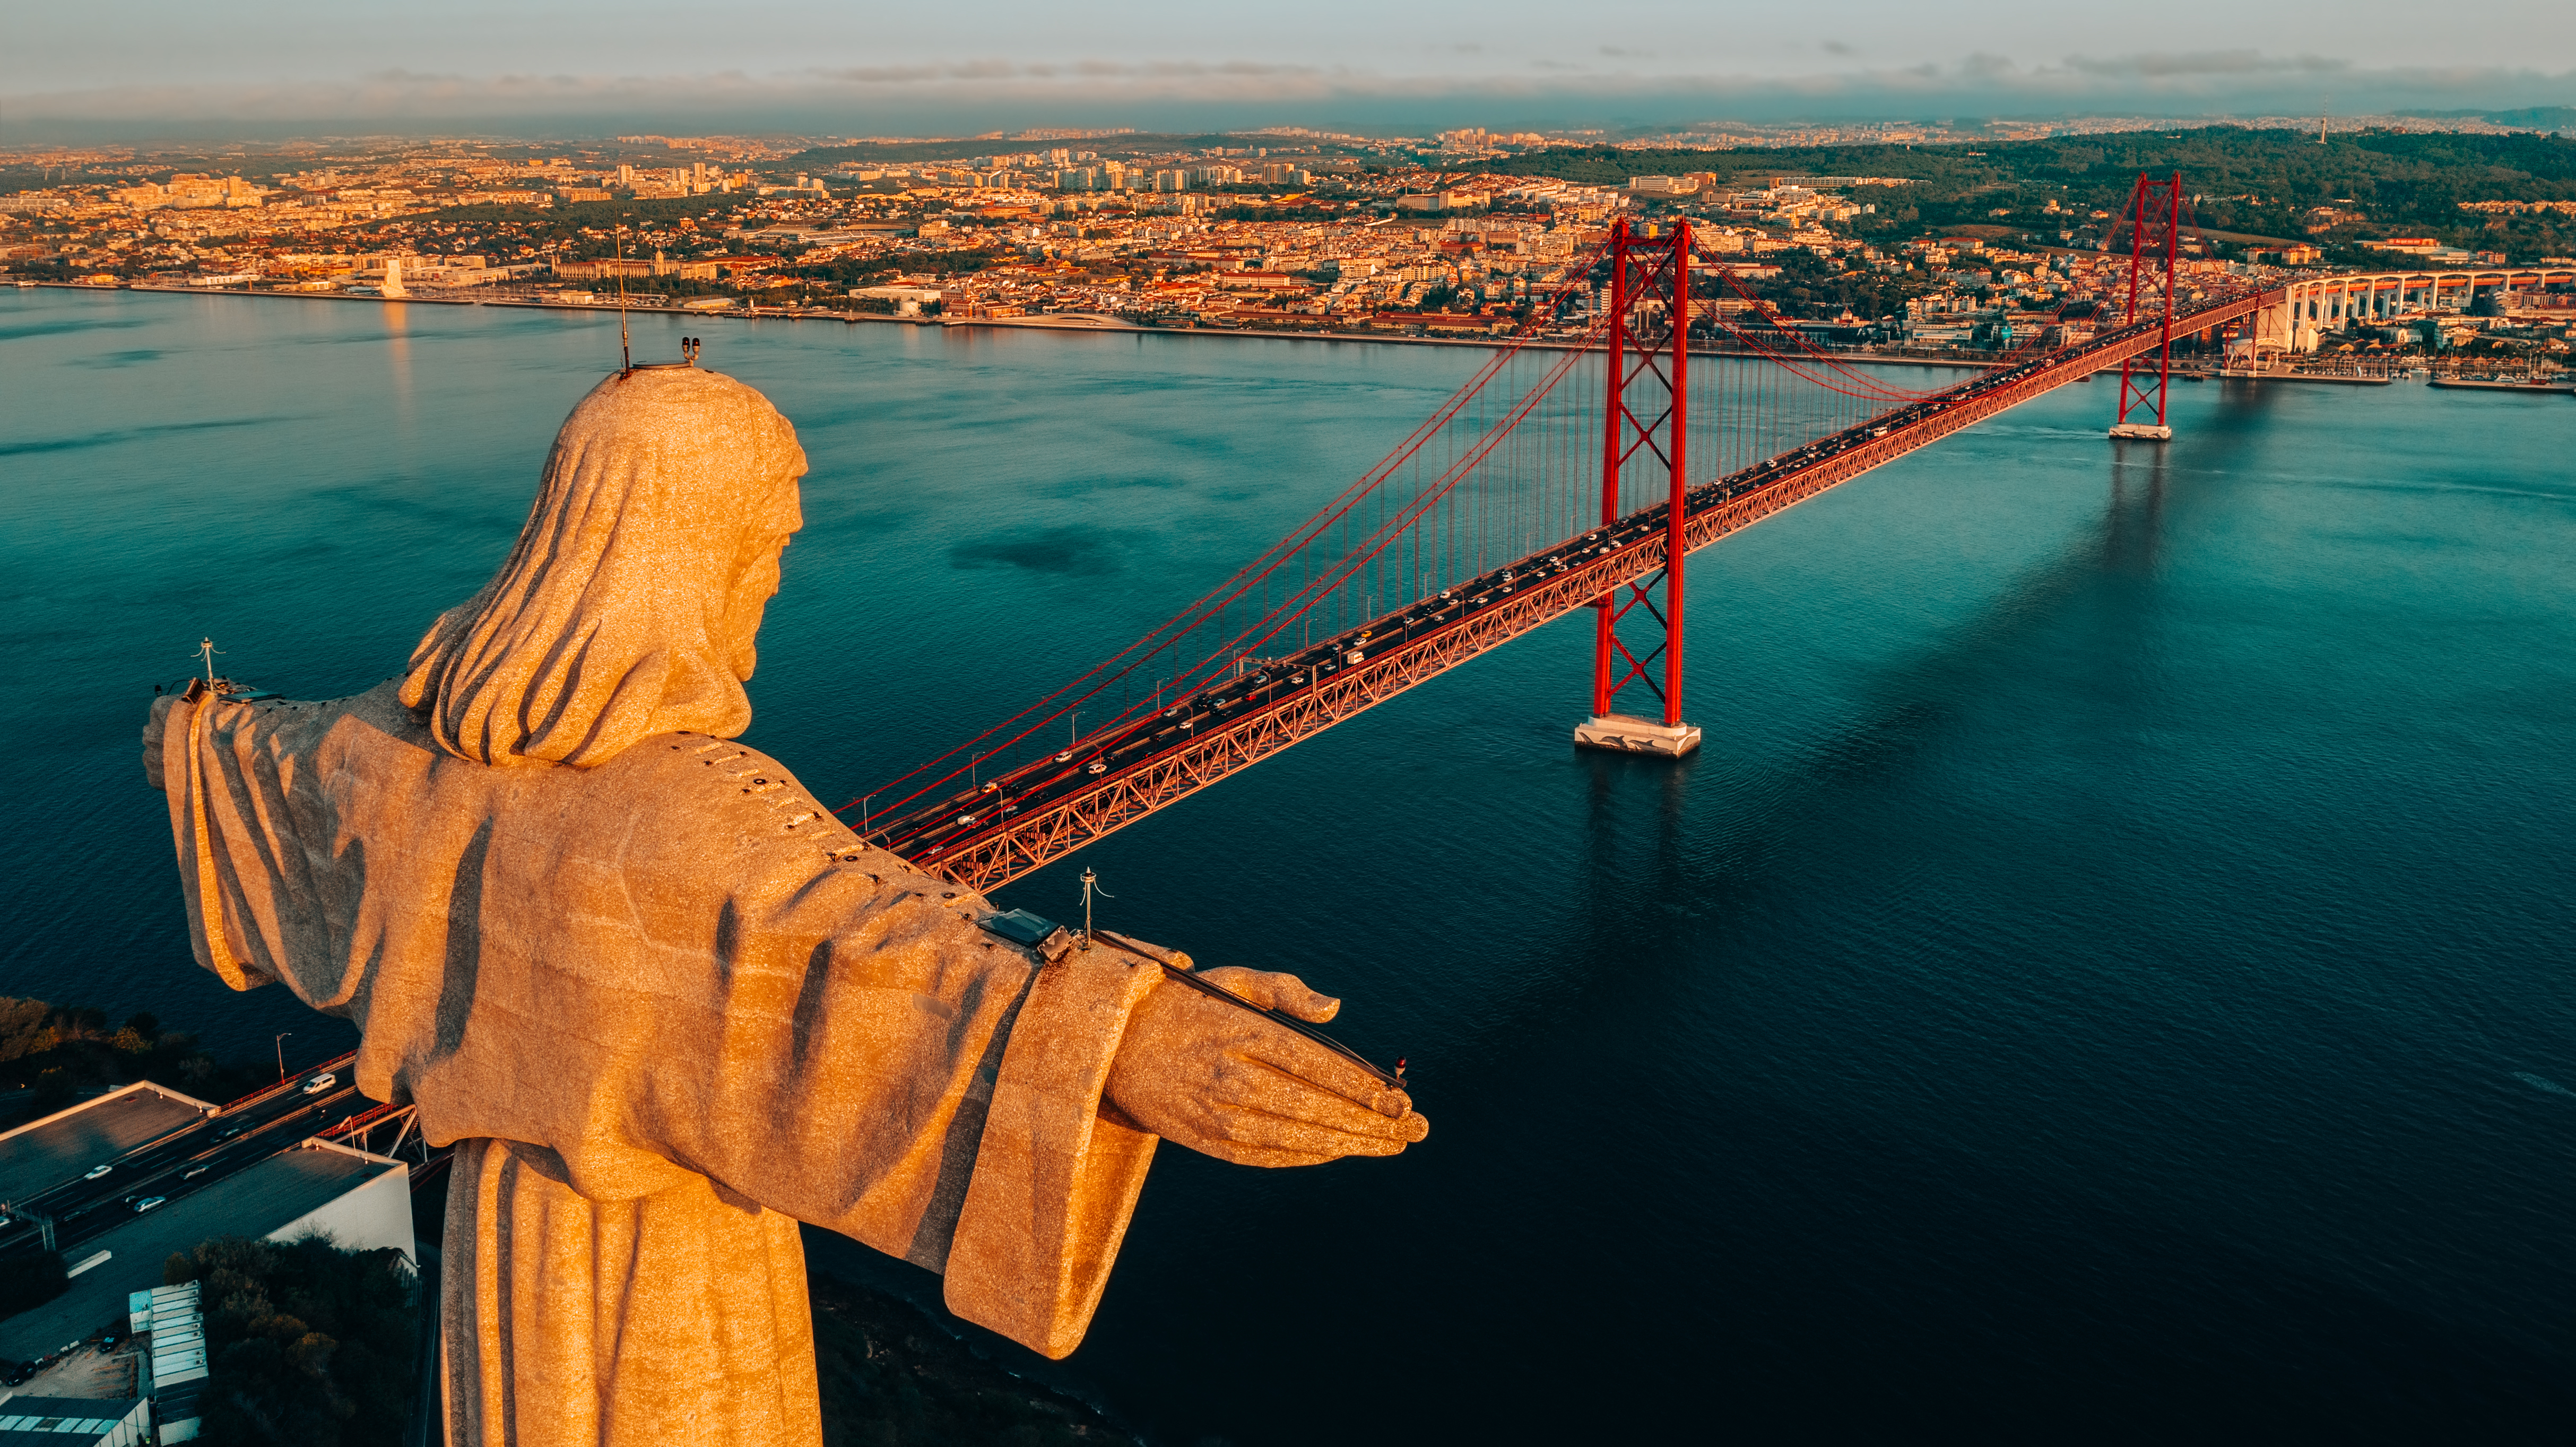 Christ the King_ Lisbon_ Portugal